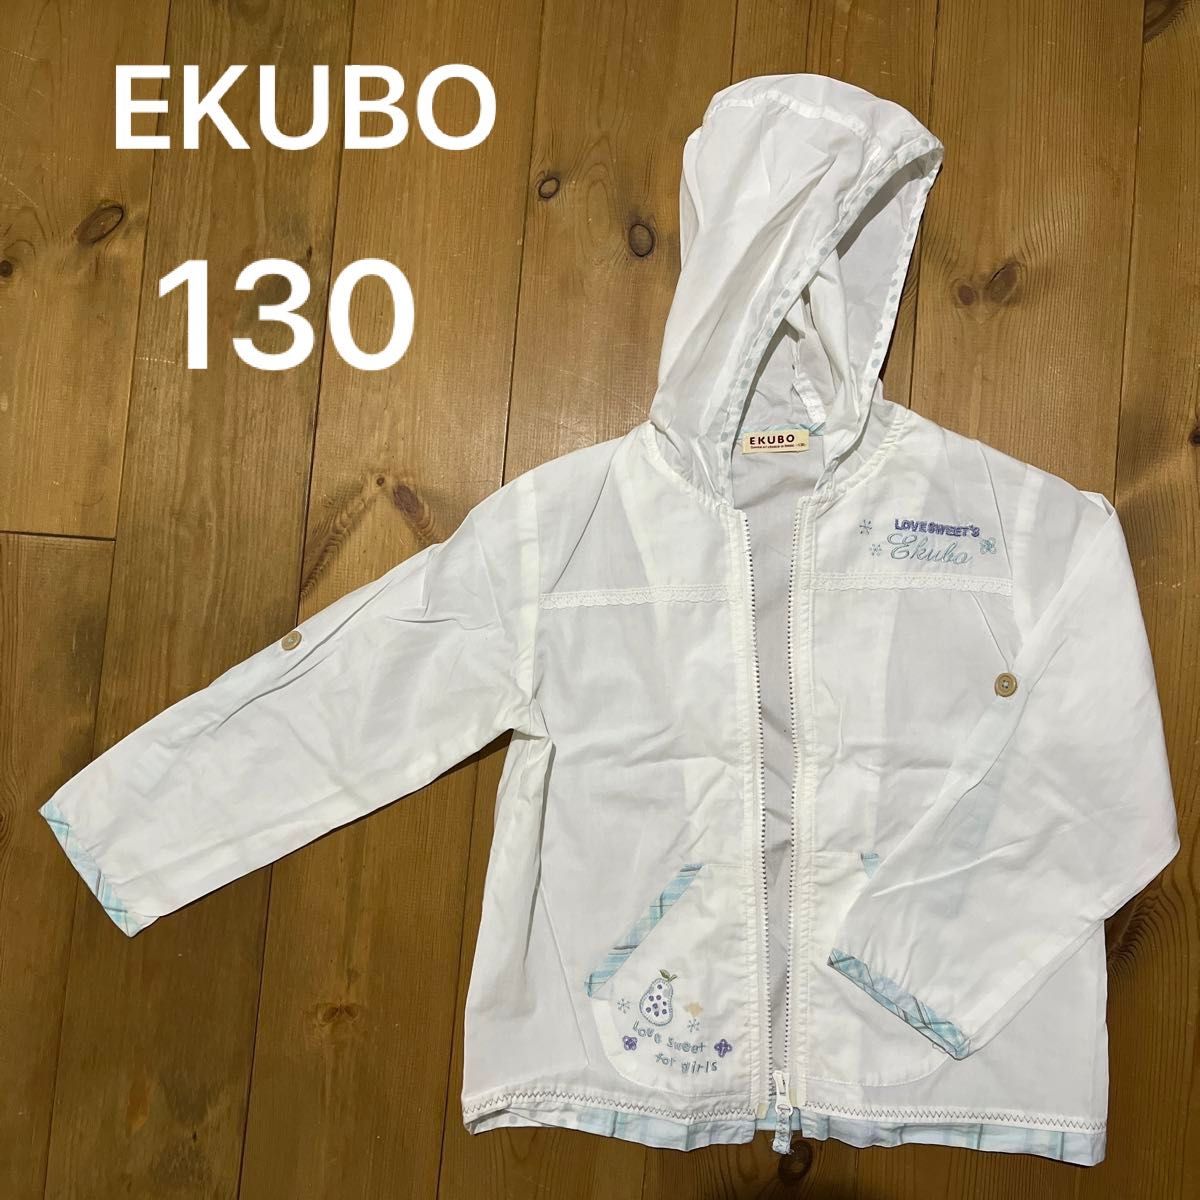 EKUBO ジャンバー 上着 130cm 女の子 パーカー フード付 ホワイト